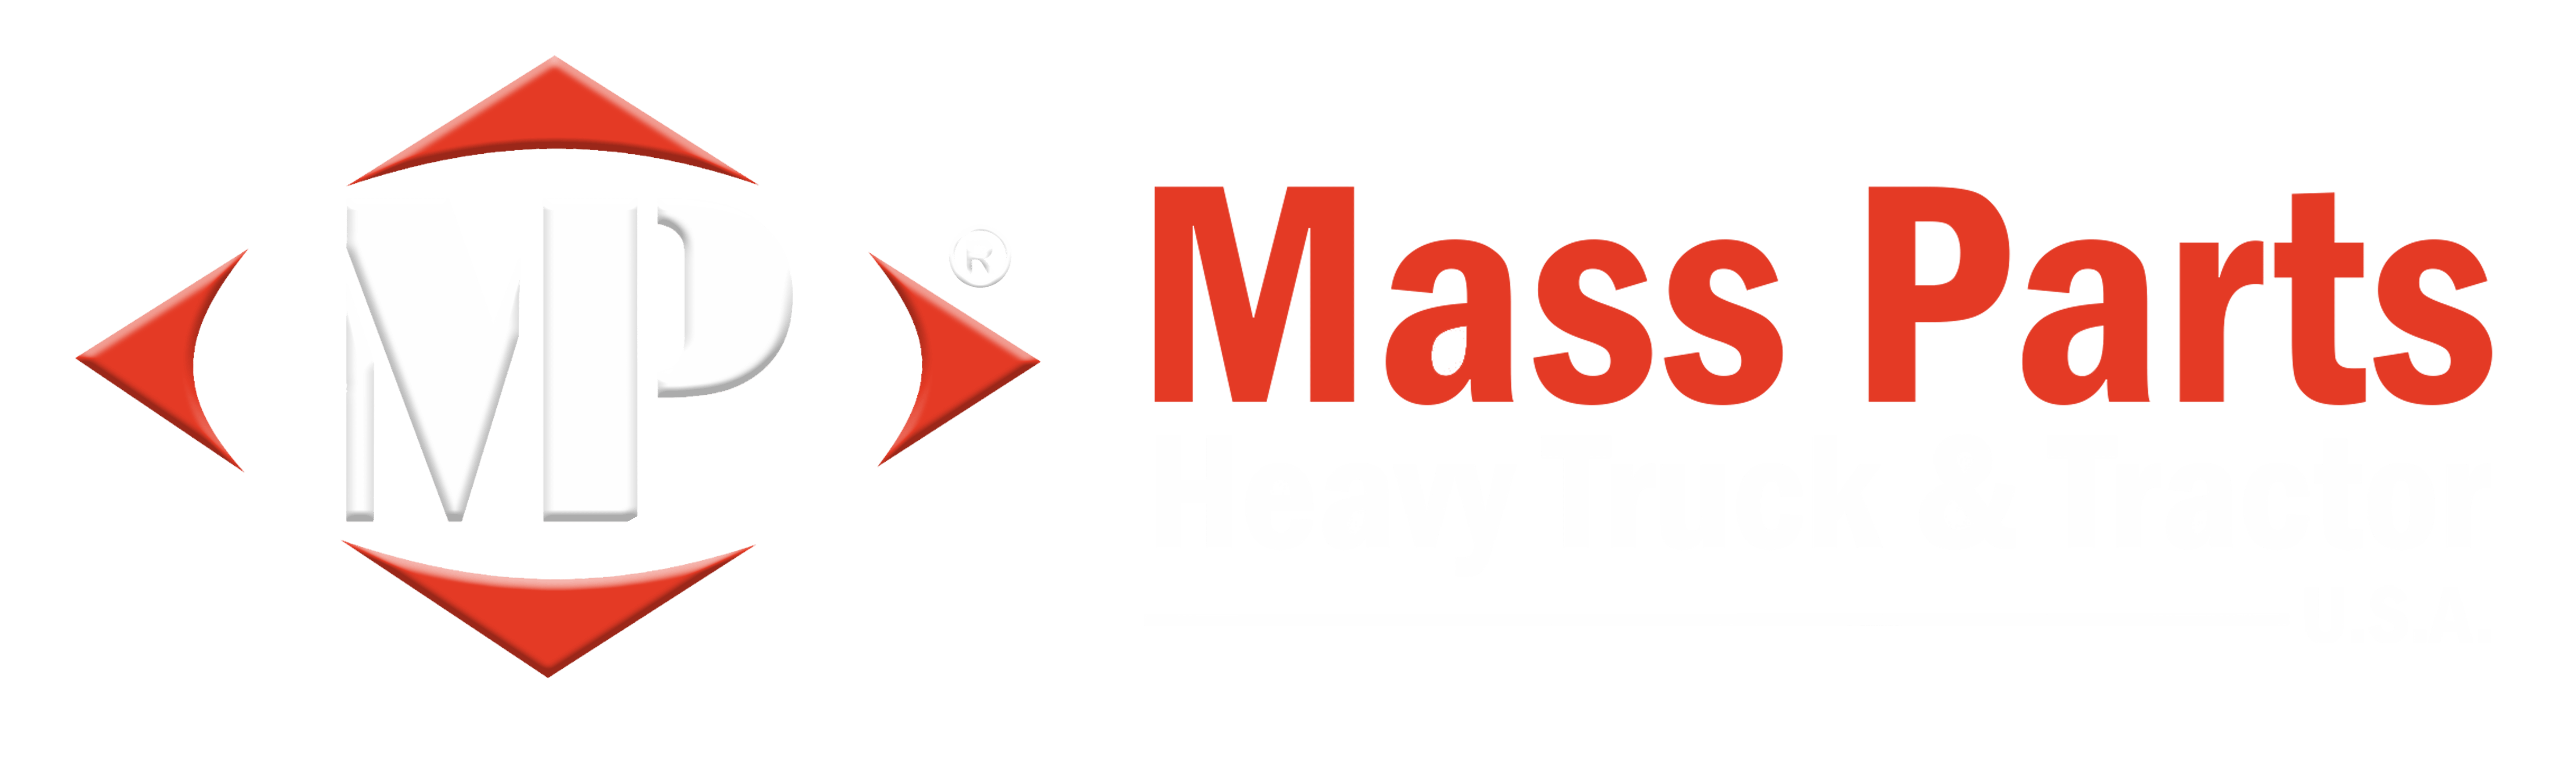 Parts Logo - Logo Mass Parts MP White Long Clear – Mass Parts USA